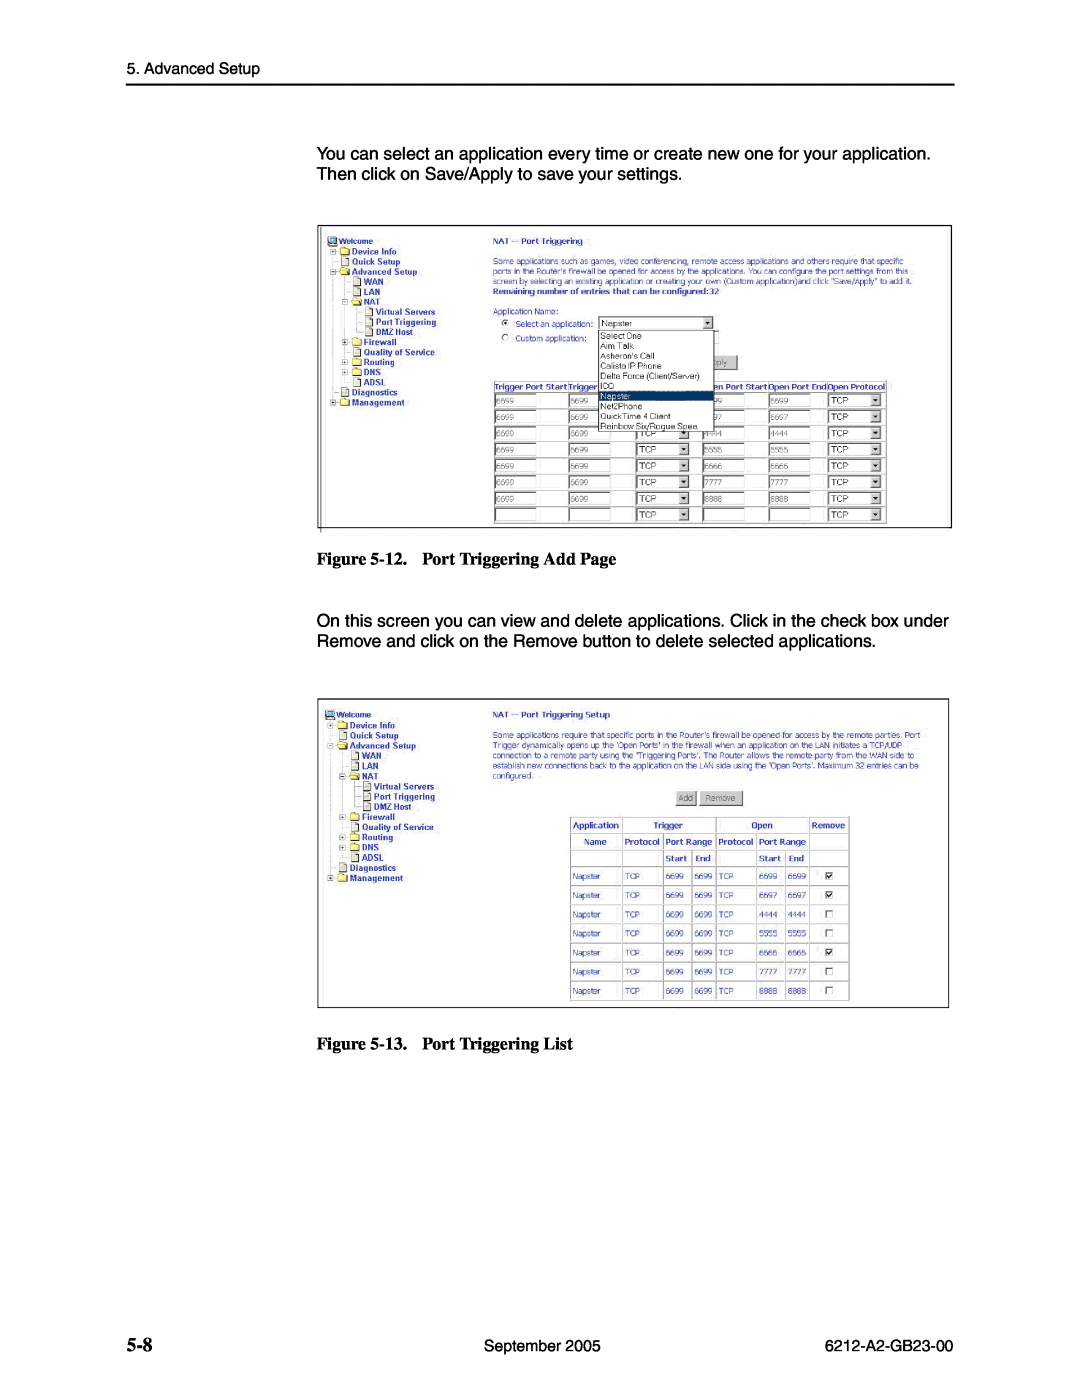 Paradyne 6212-I1 manual 12. Port Triggering Add Page, 13. Port Triggering List 